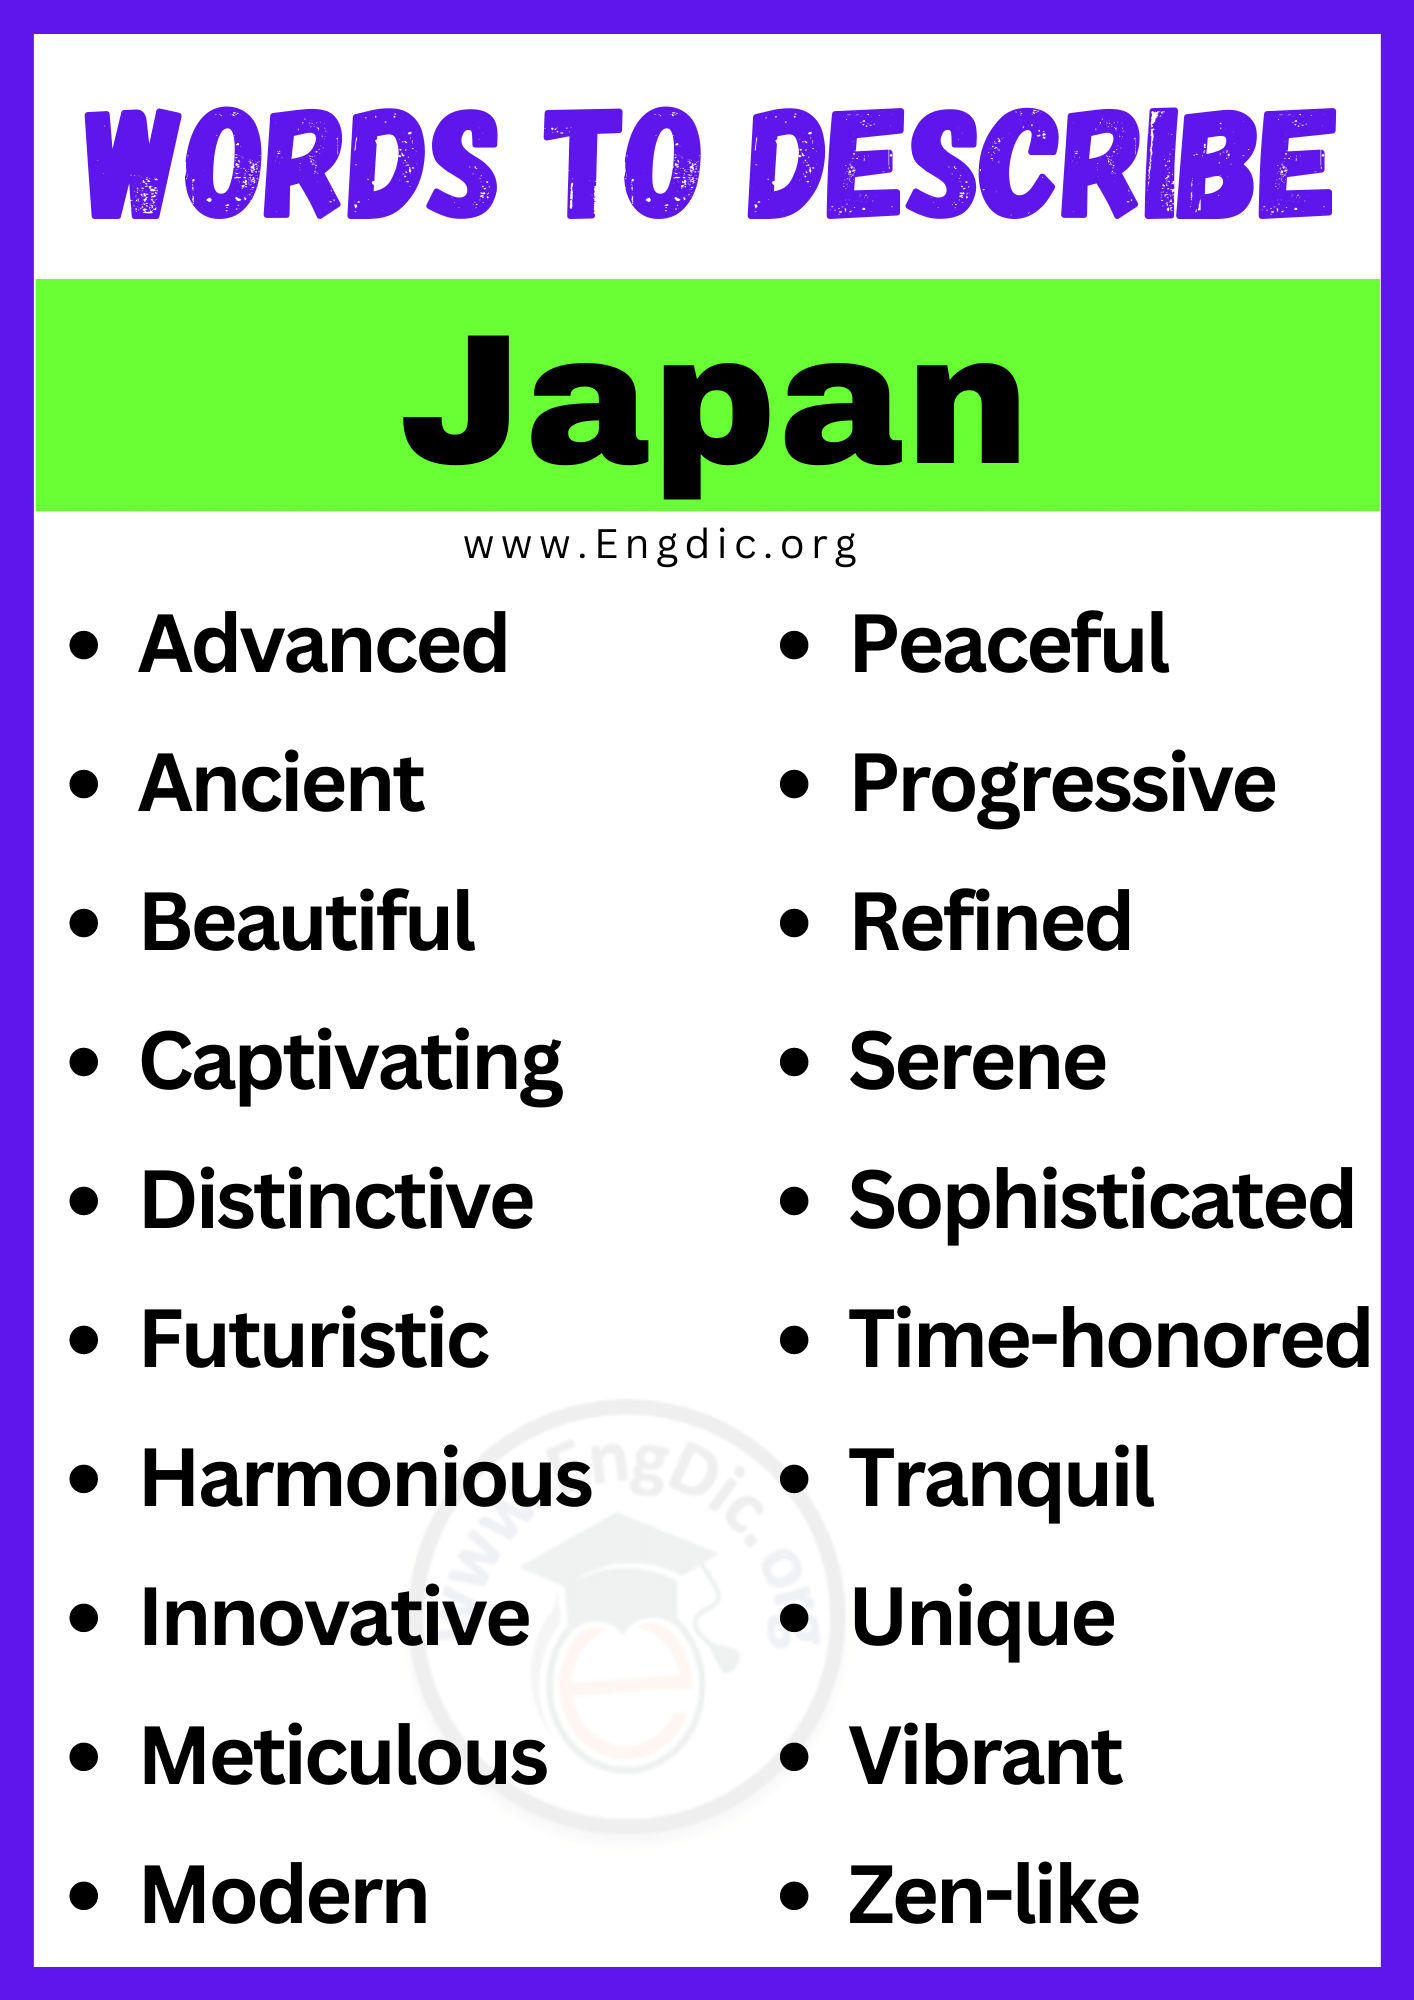 Words to Describe Japan